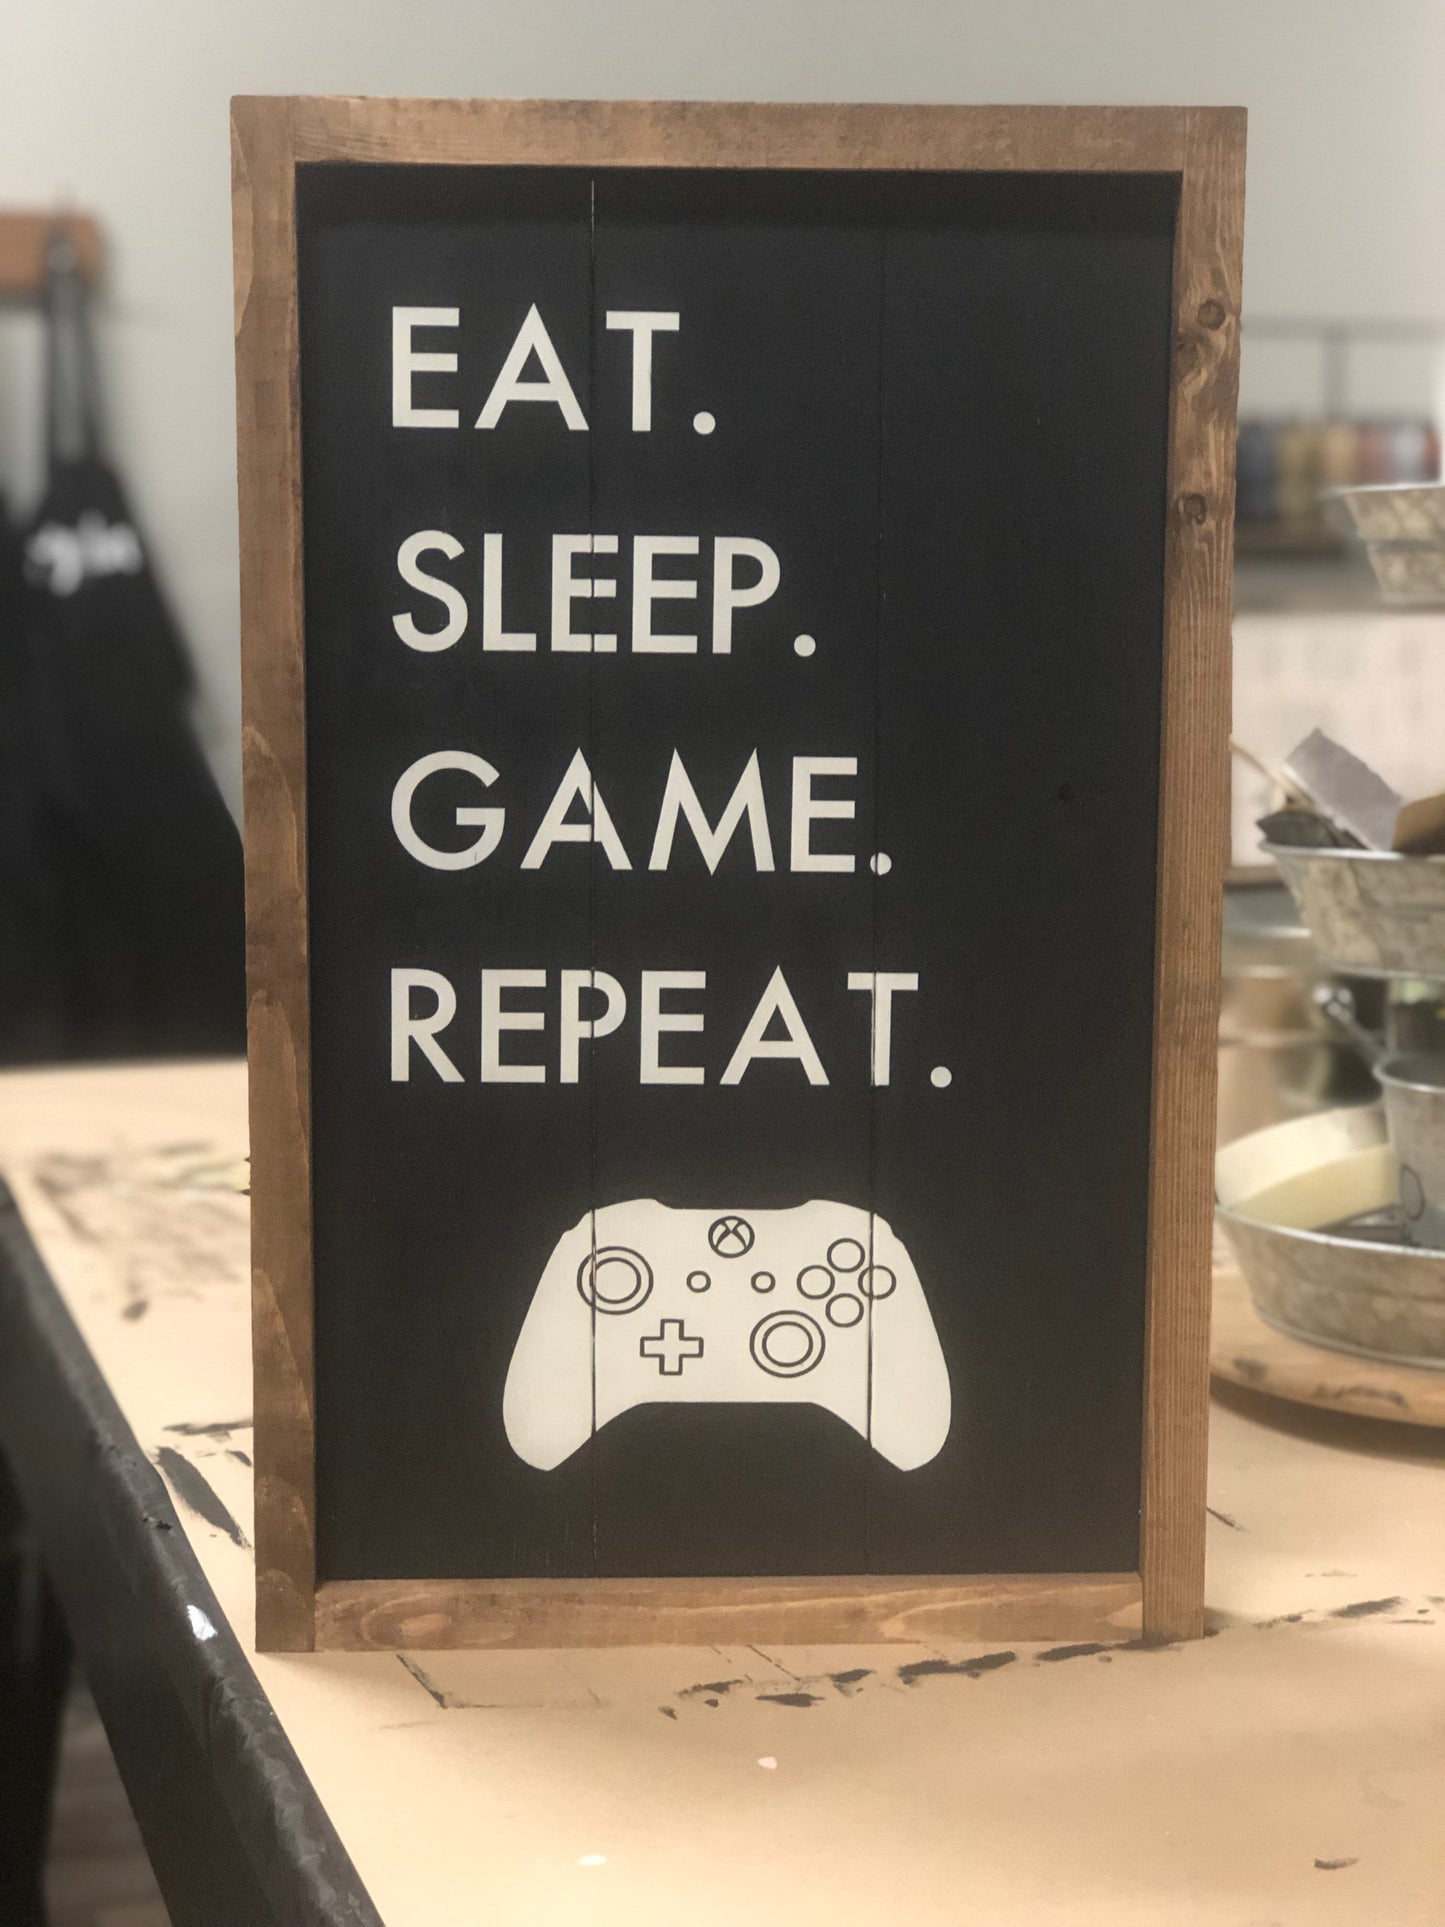 Eat. Sleep. Game. Repeat